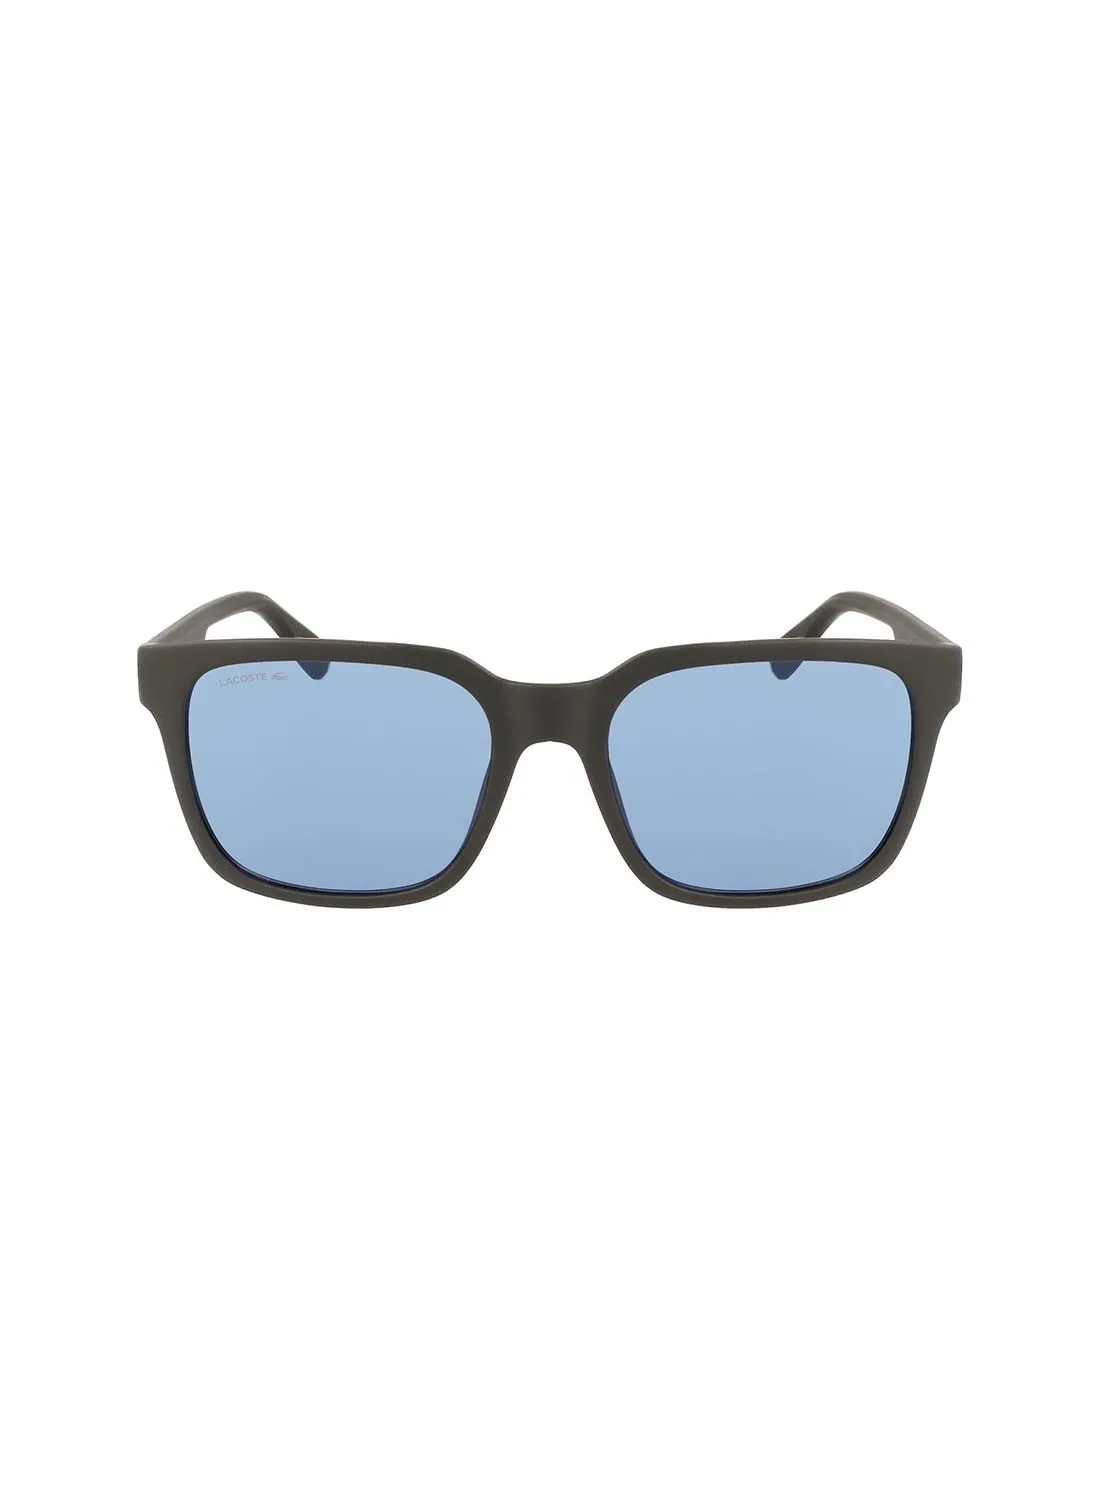 LACOSTE UV Rays Protection Eyewear Sunglasses L967S-010-5519